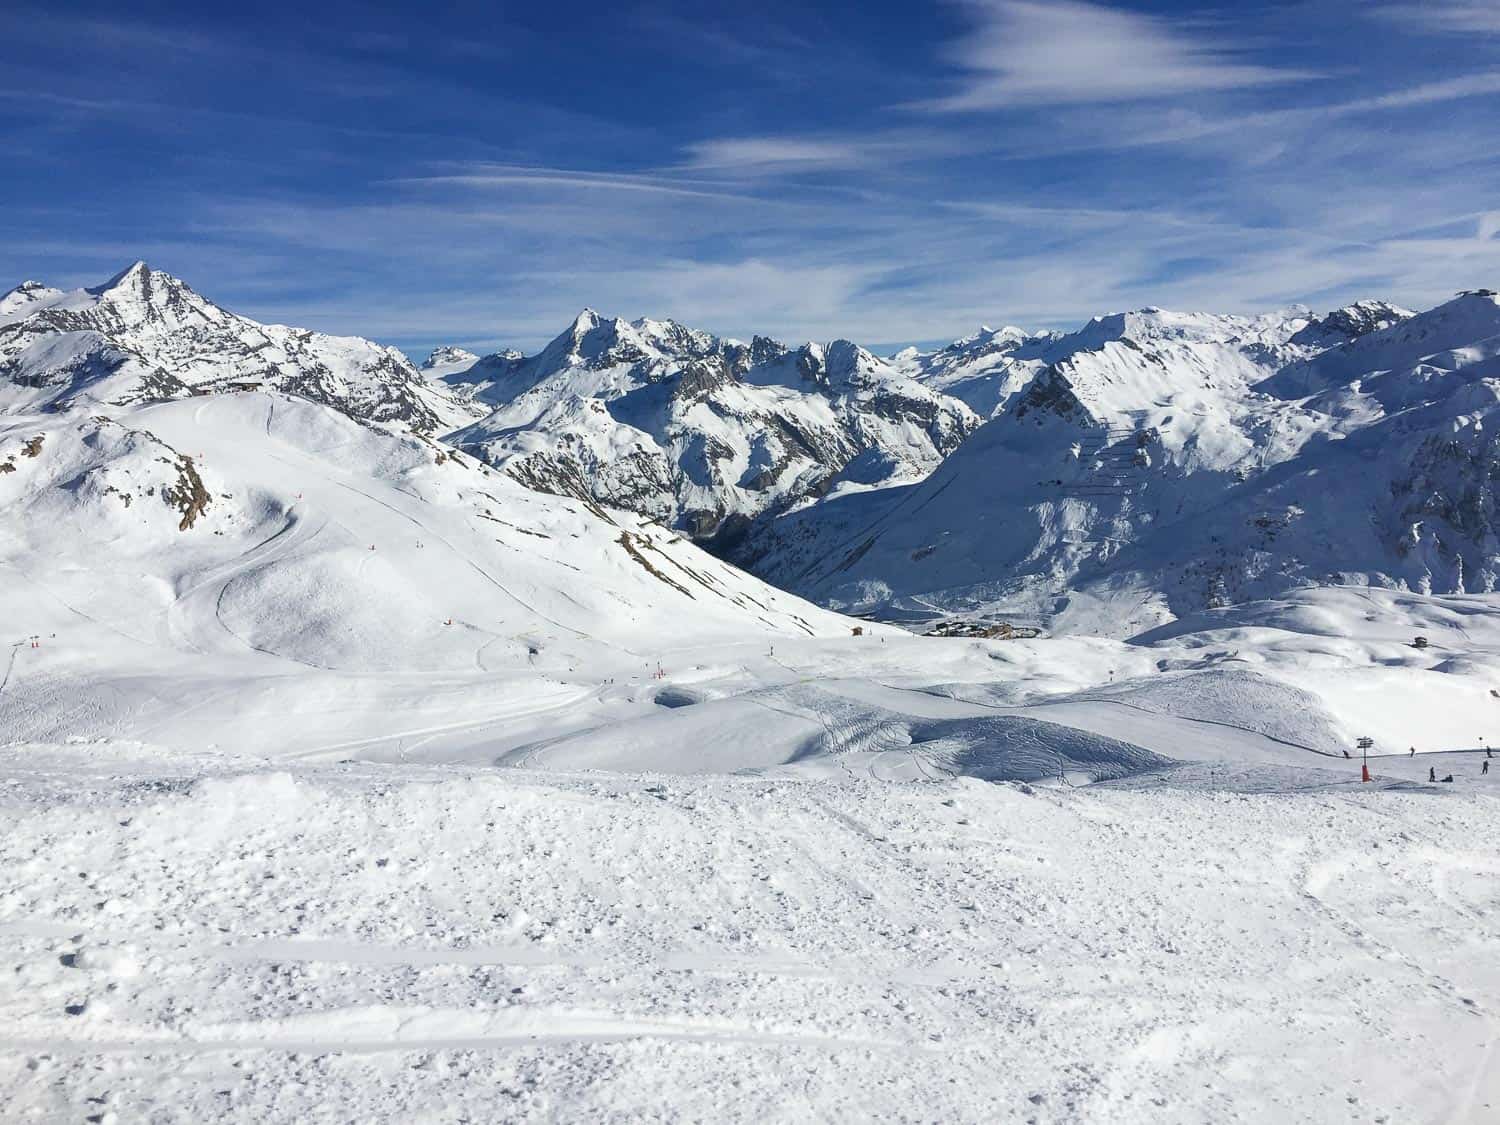 Alpine Elements review of a ski trip to Tignes, France at Hotel Haut de Toviere